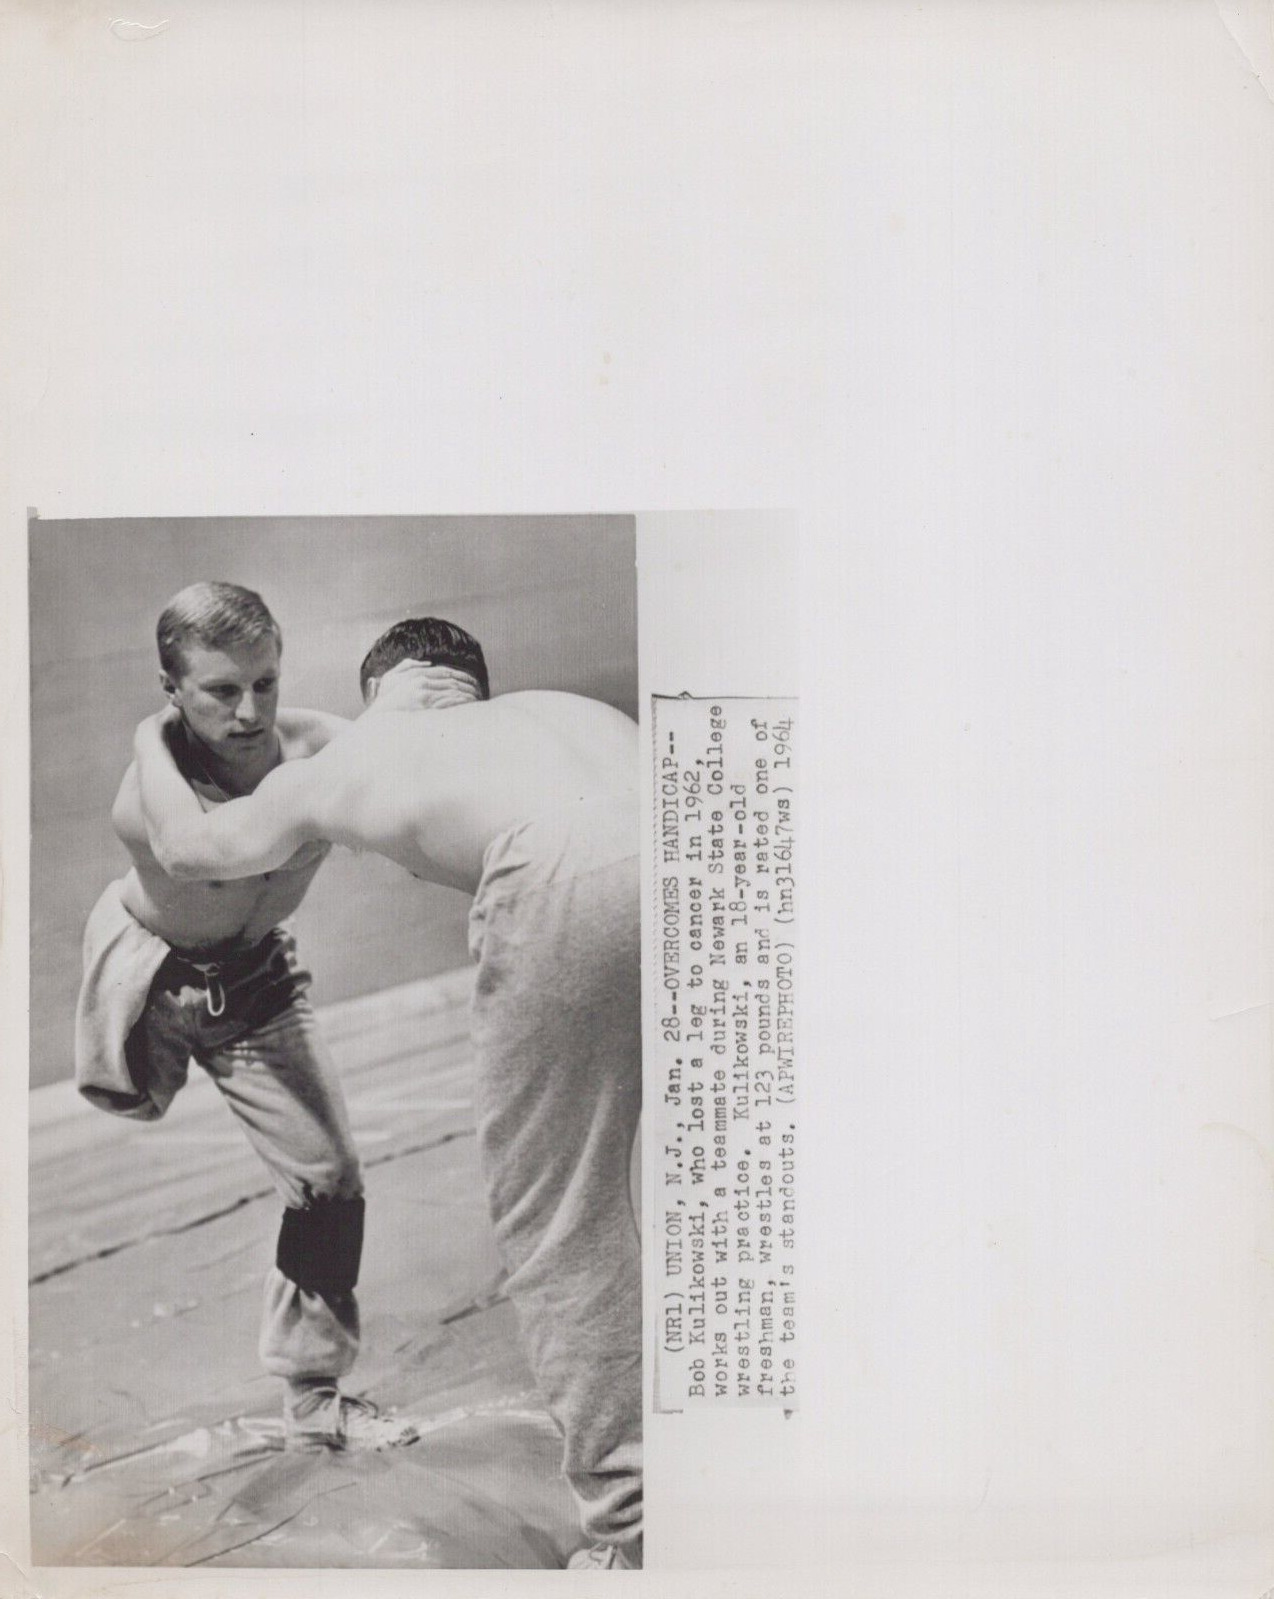 AMERICAN VINTAGE SPORTS HANDICAP BOB KULIKOWSKI TRAINING 1962 Photo Y 413